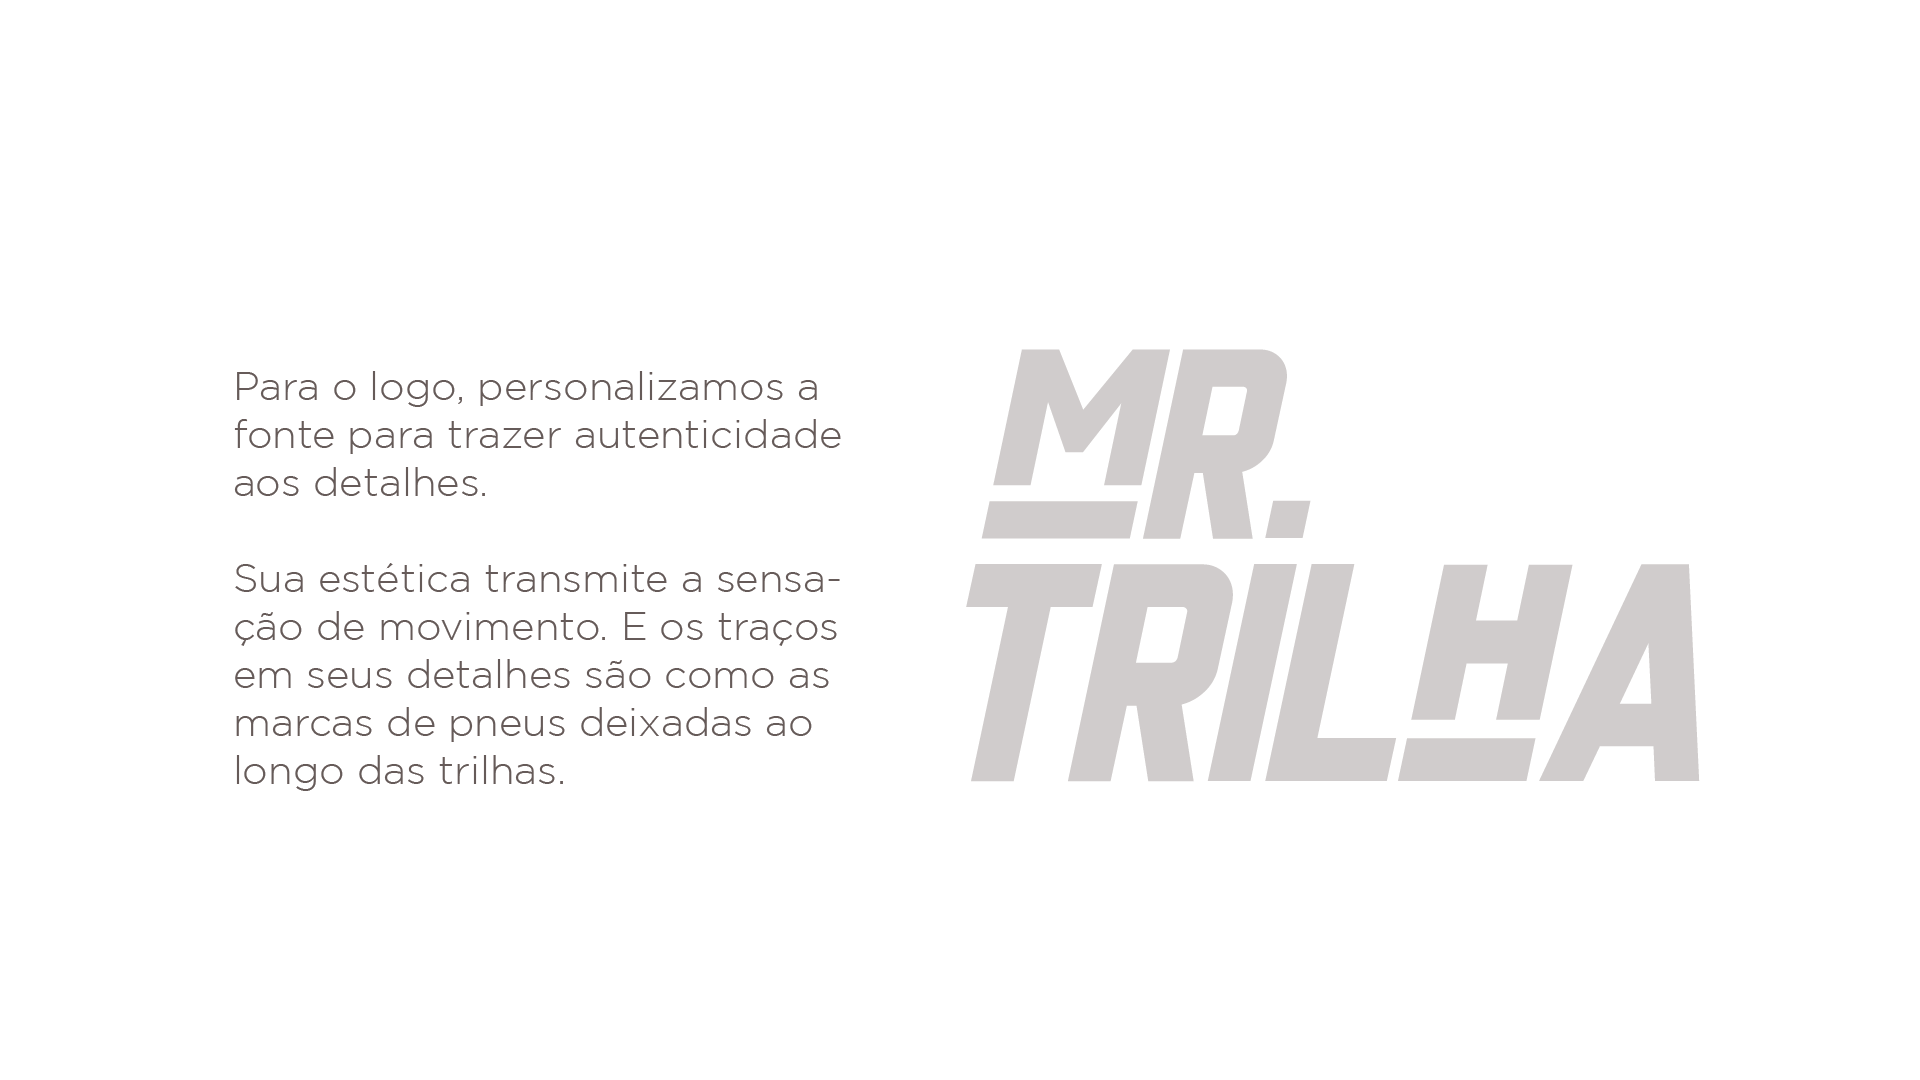 Mr. Trilha